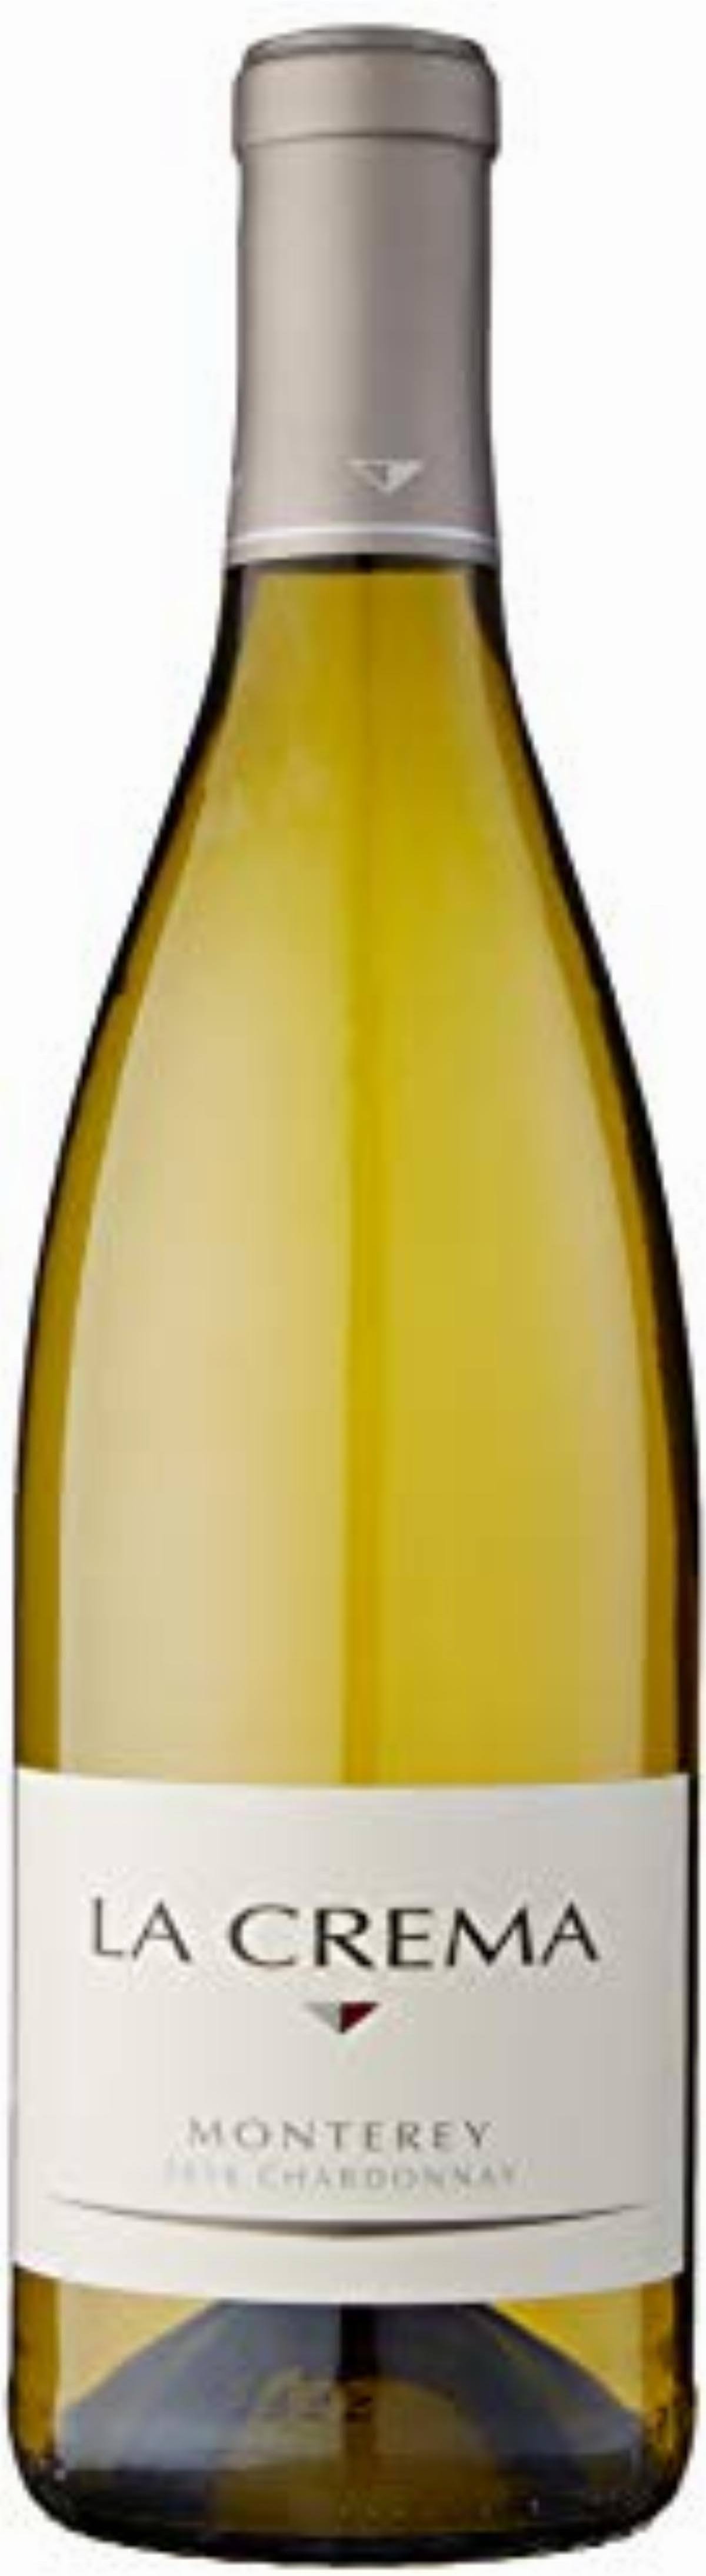 La Crema Chardonnay - Monterey, 2009